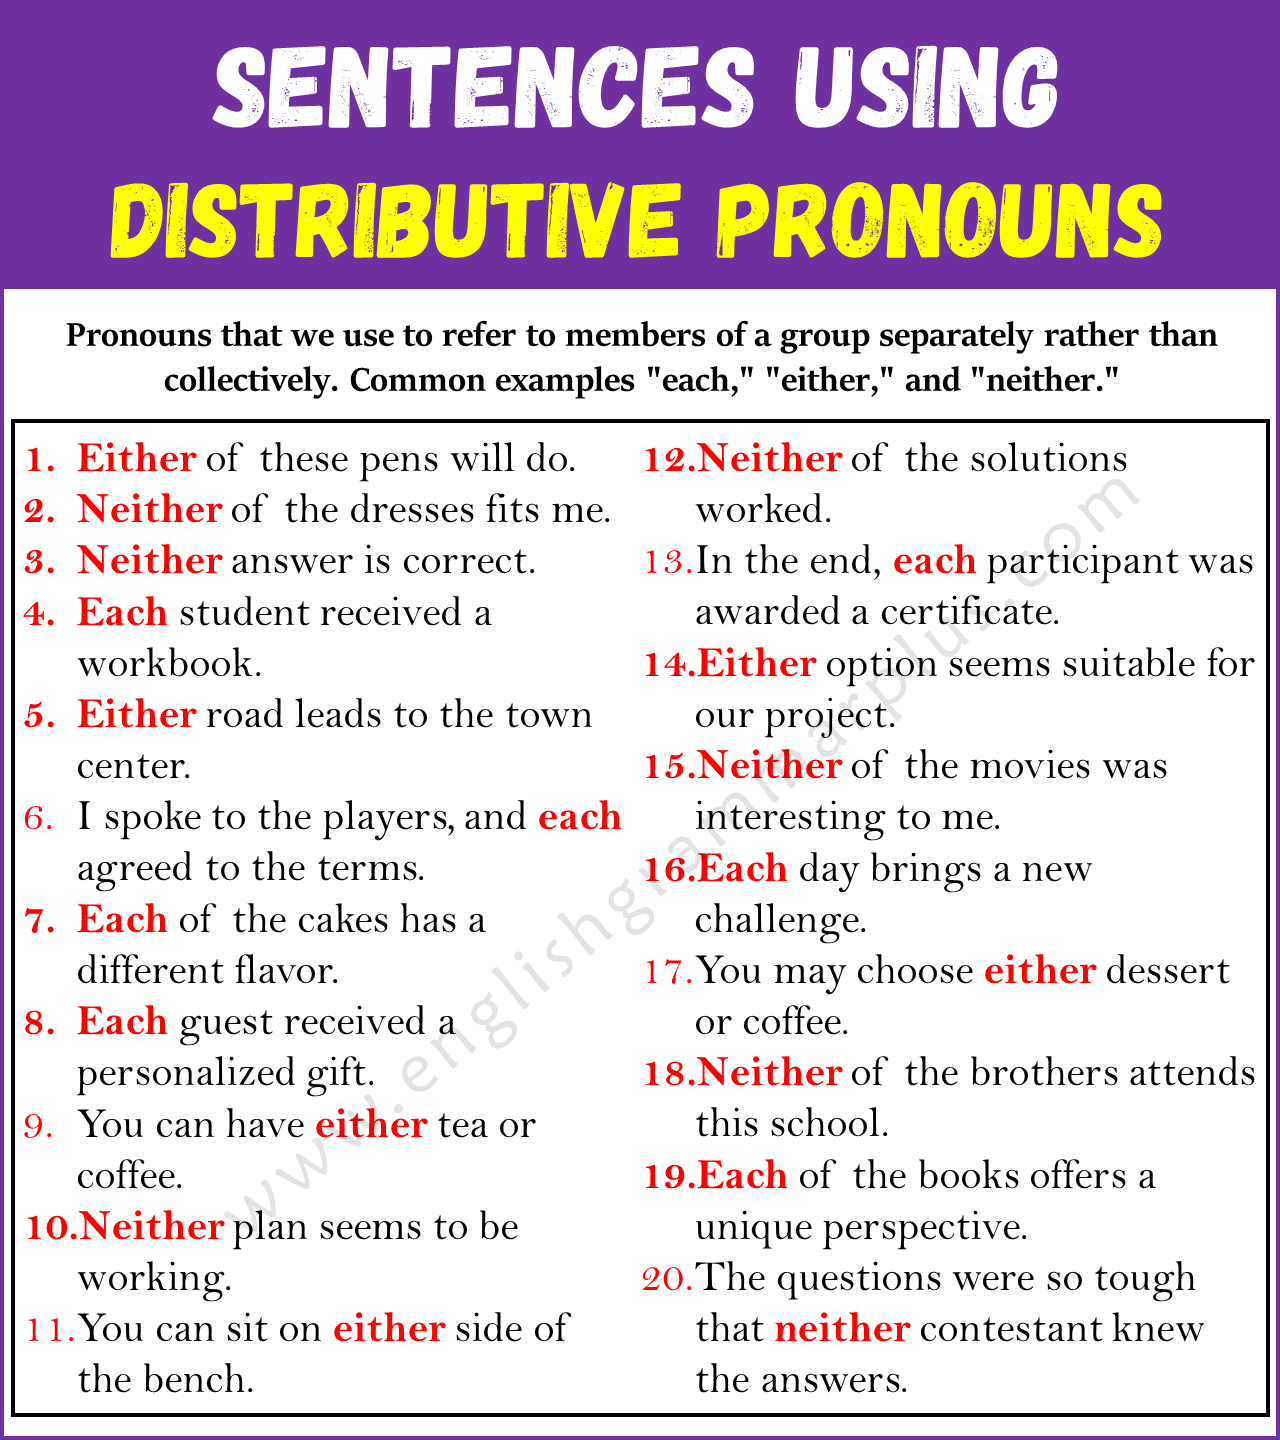 Examples of Distributive Pronouns in Sentences